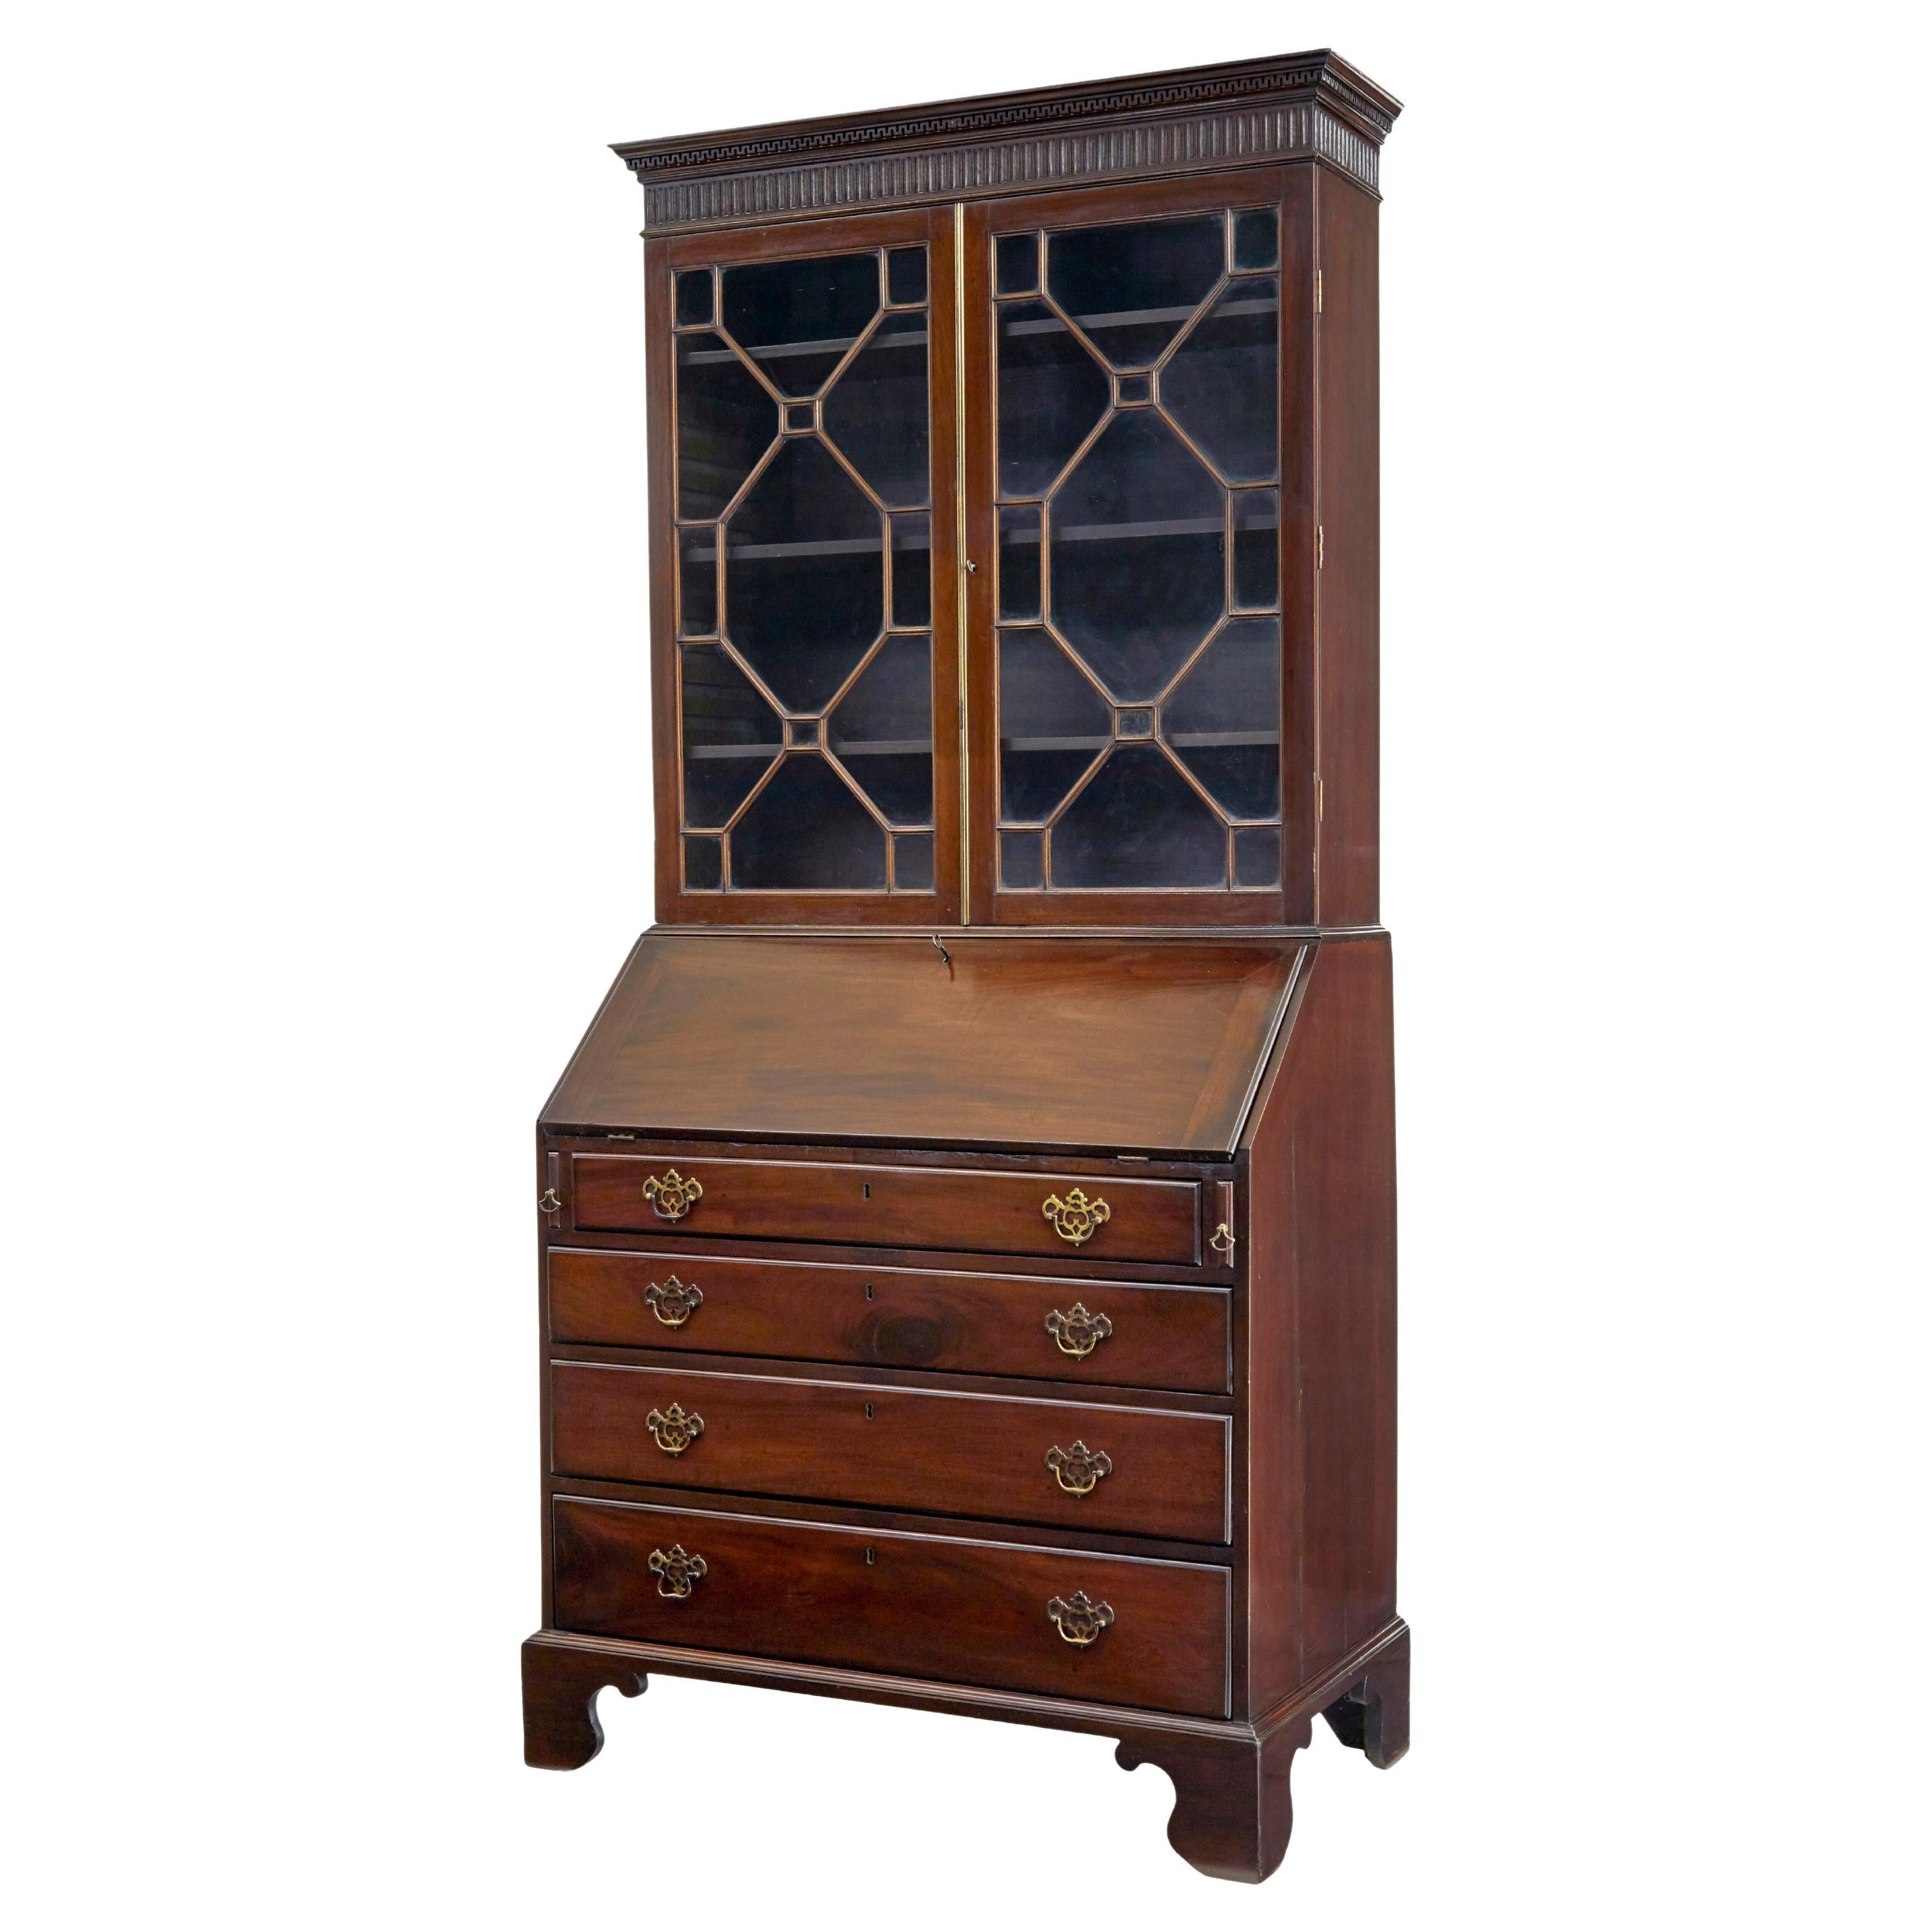 Early 19th century mahogany astral glazed bureau bookcase For Sale